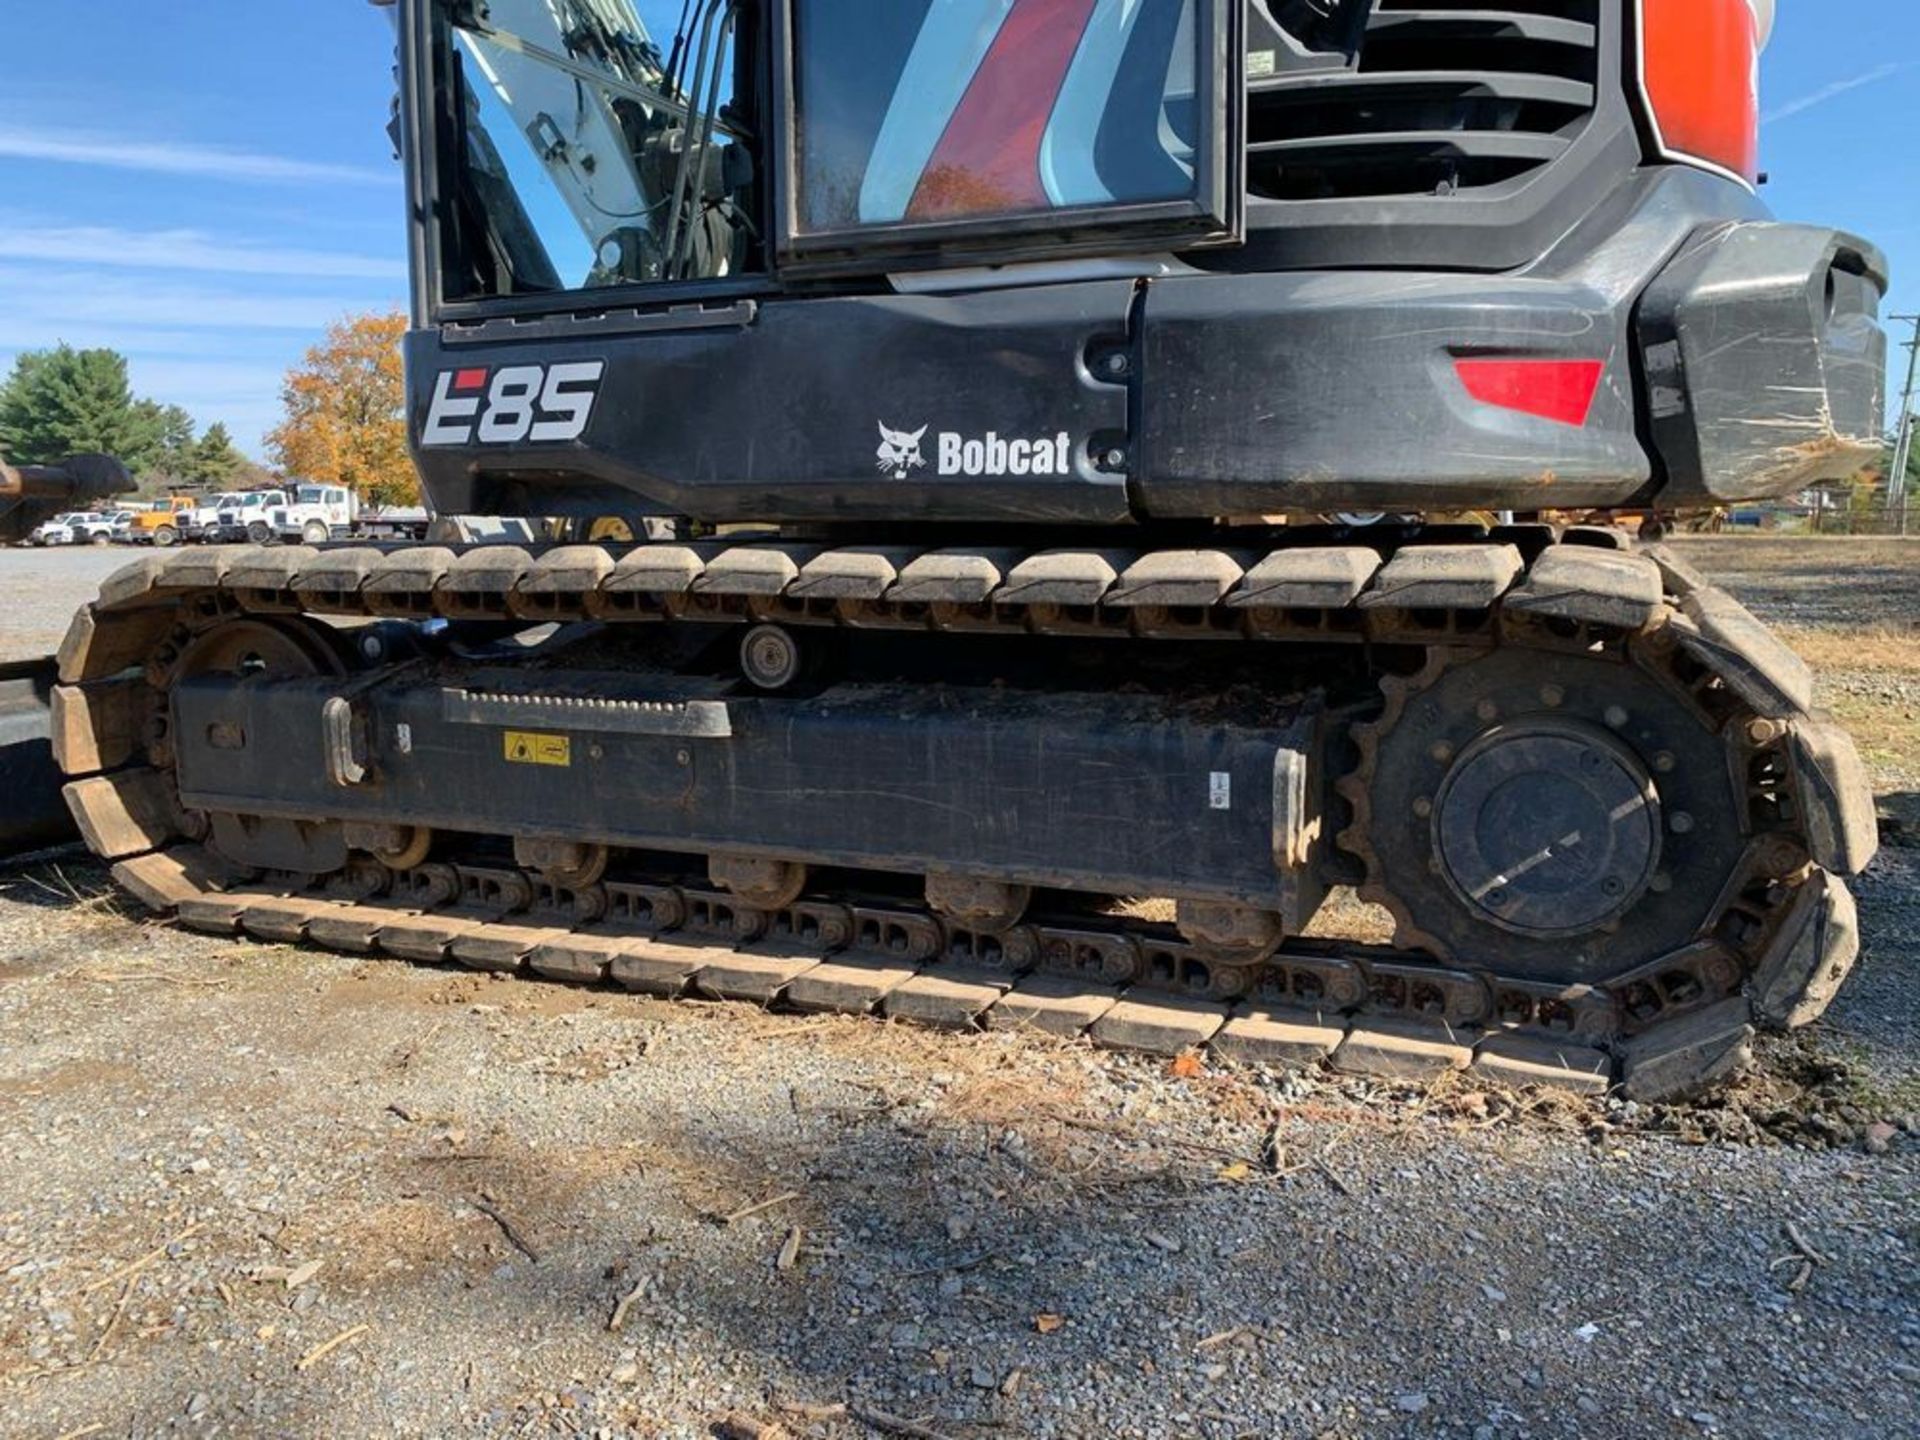 2018 Bobcat E85 R Series Excavator - Image 42 of 85